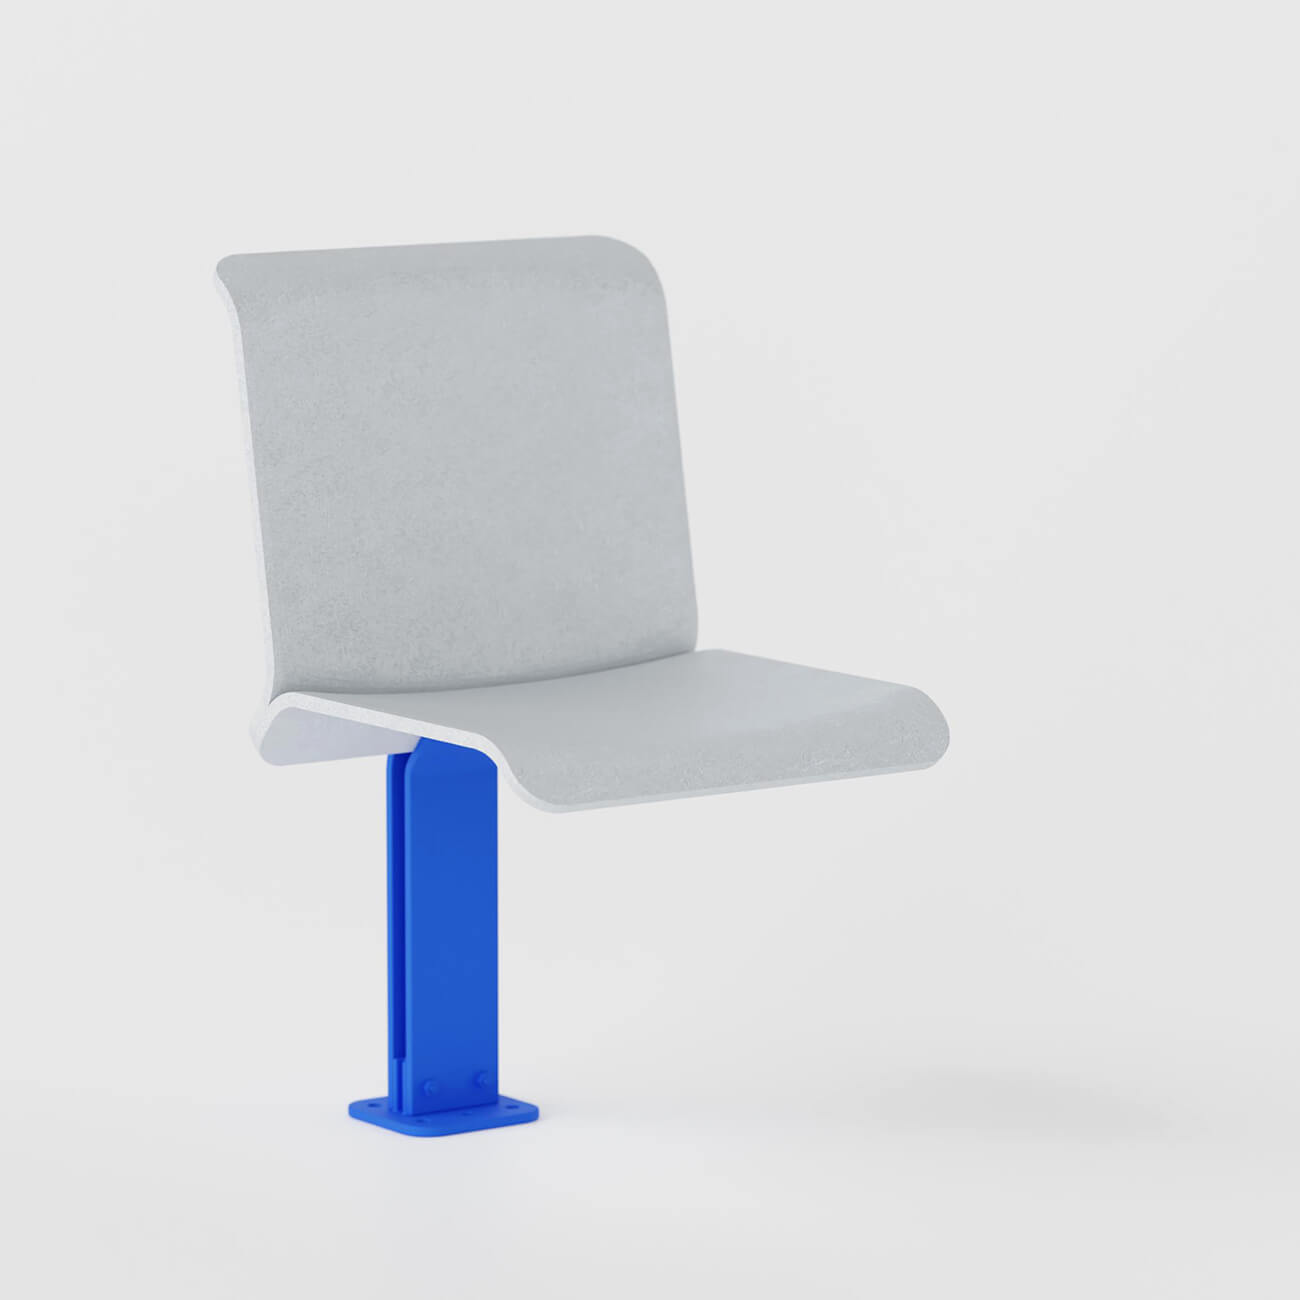 industrial-design-outdoor-fibcro-chair-public-space